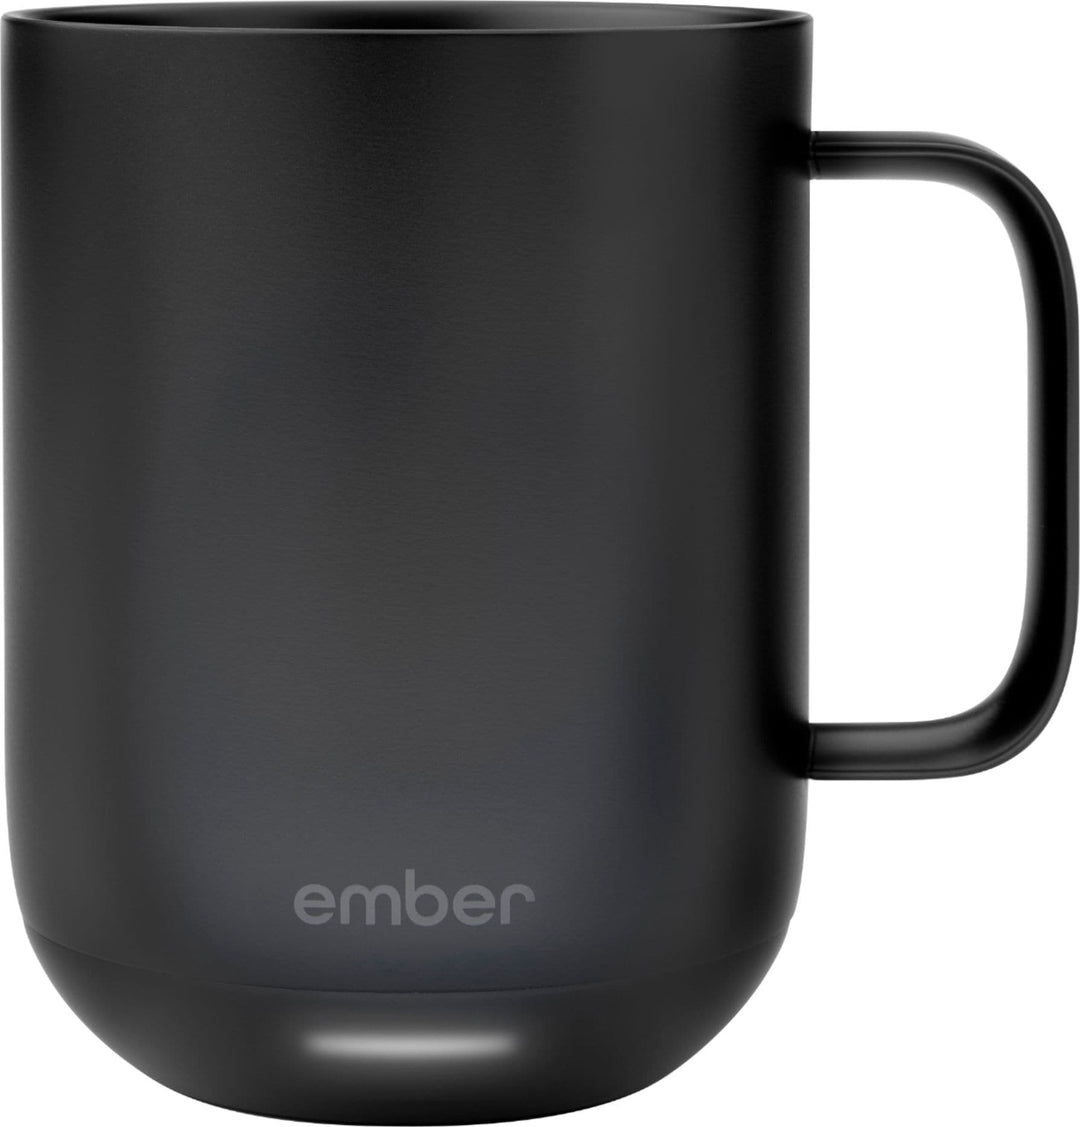 Ember - Temperature Control Smart Mug² - 10 oz - Black_1